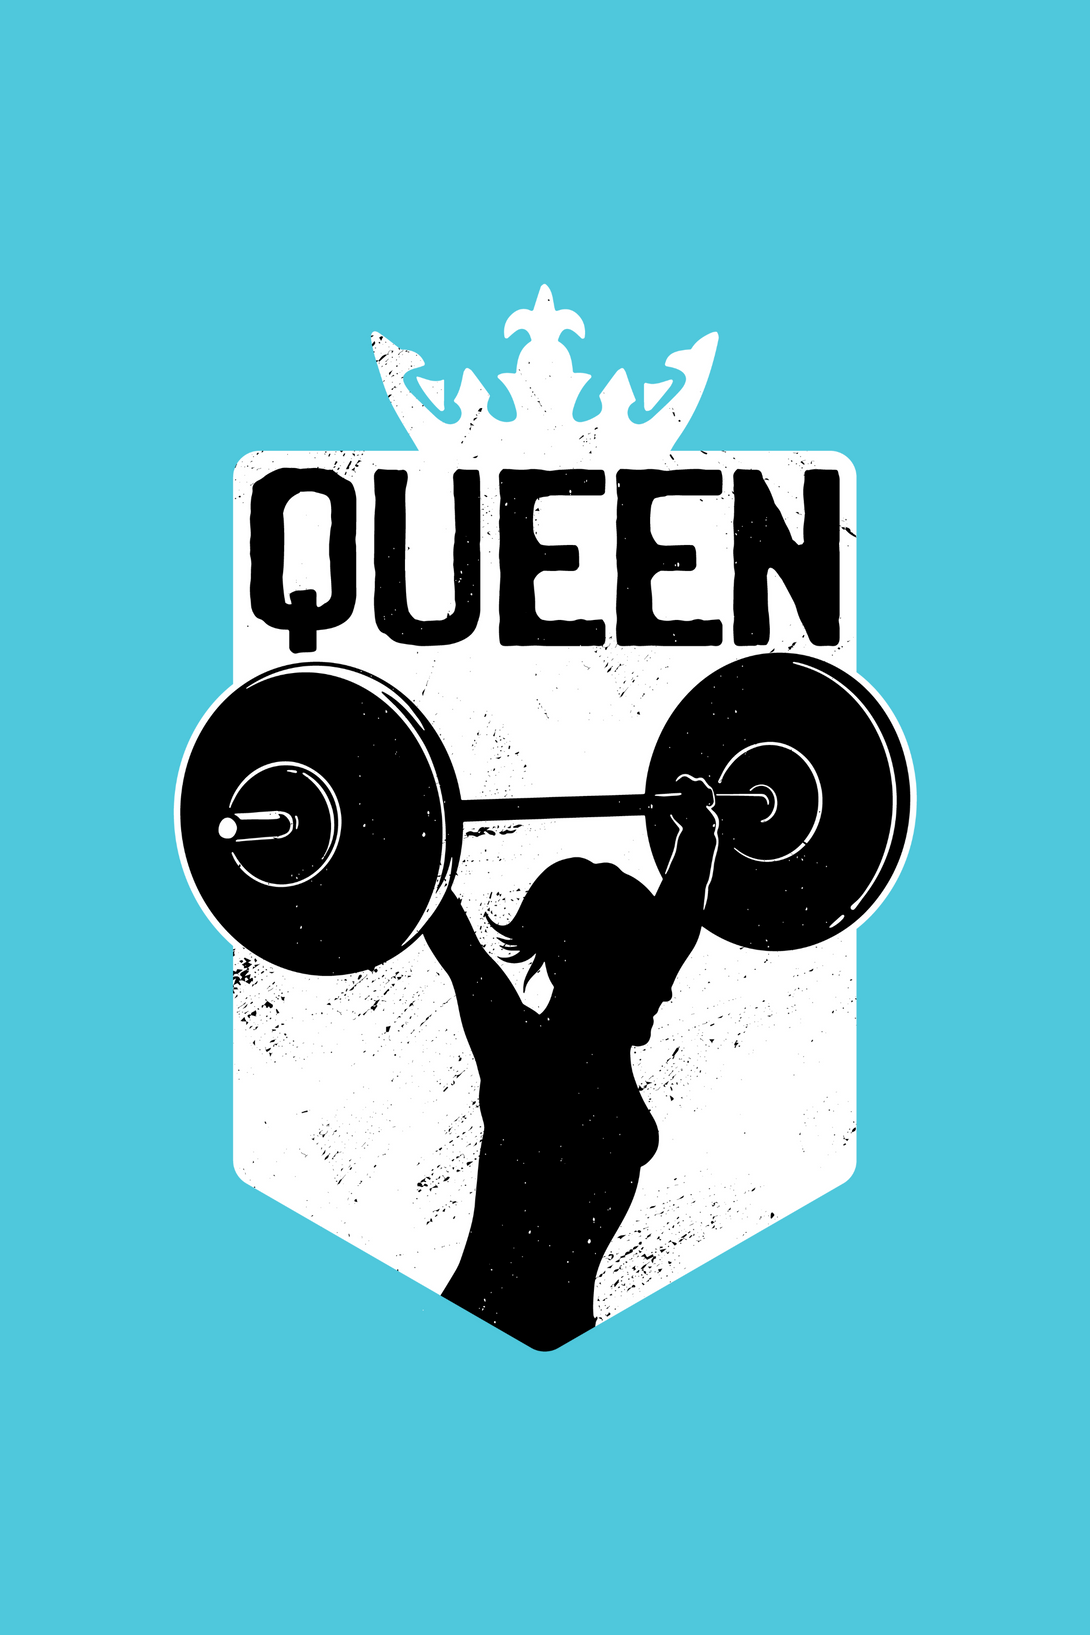 Queen Printed T-Shirt For Women - WowWaves - 1